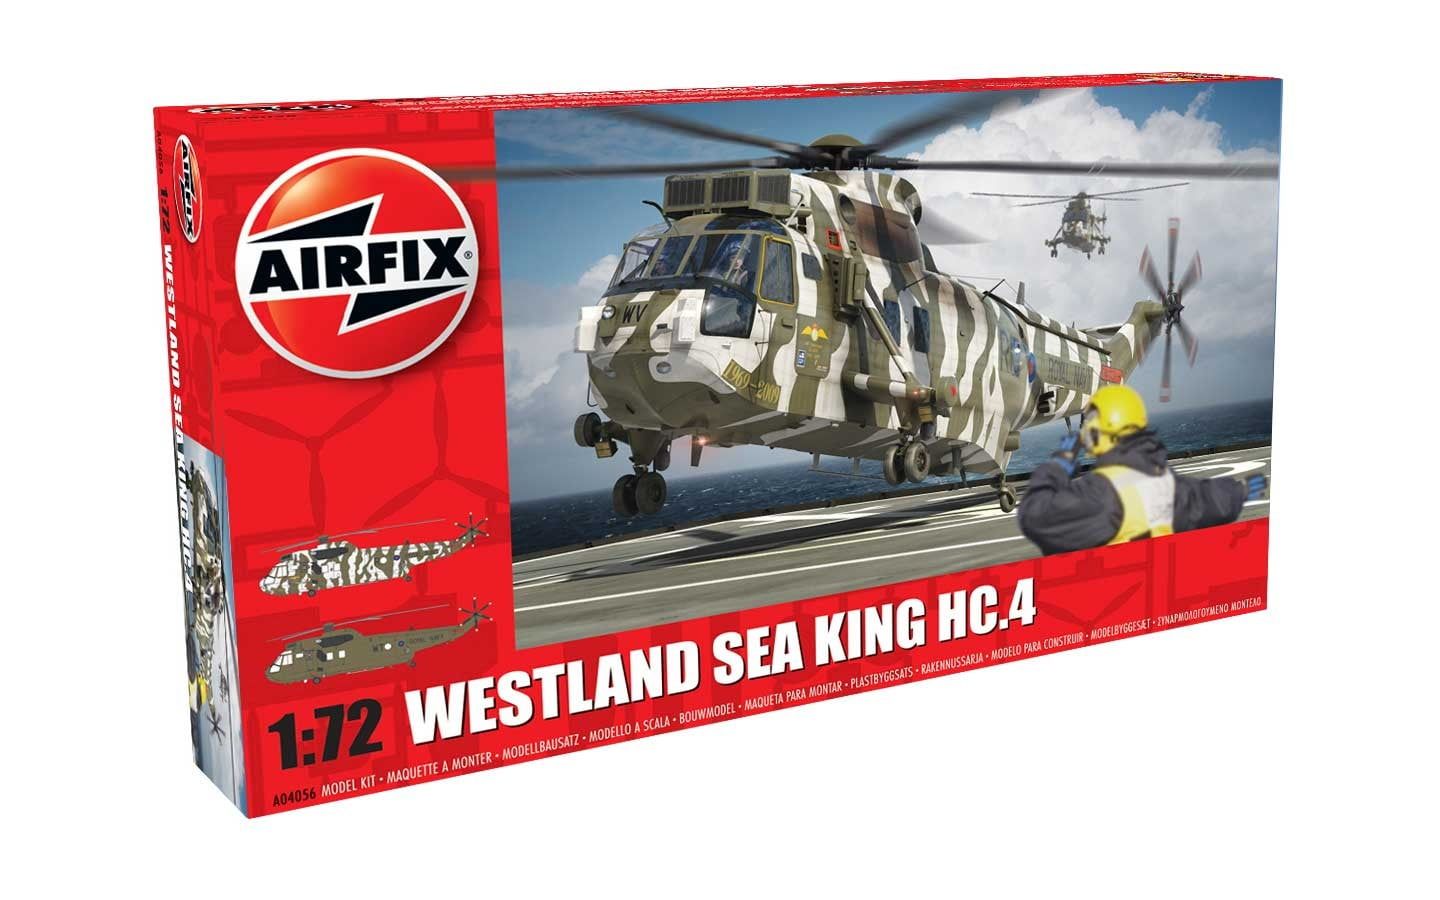 Airfix 1/72 Scale Westland Sea King HC.4 Model Kit